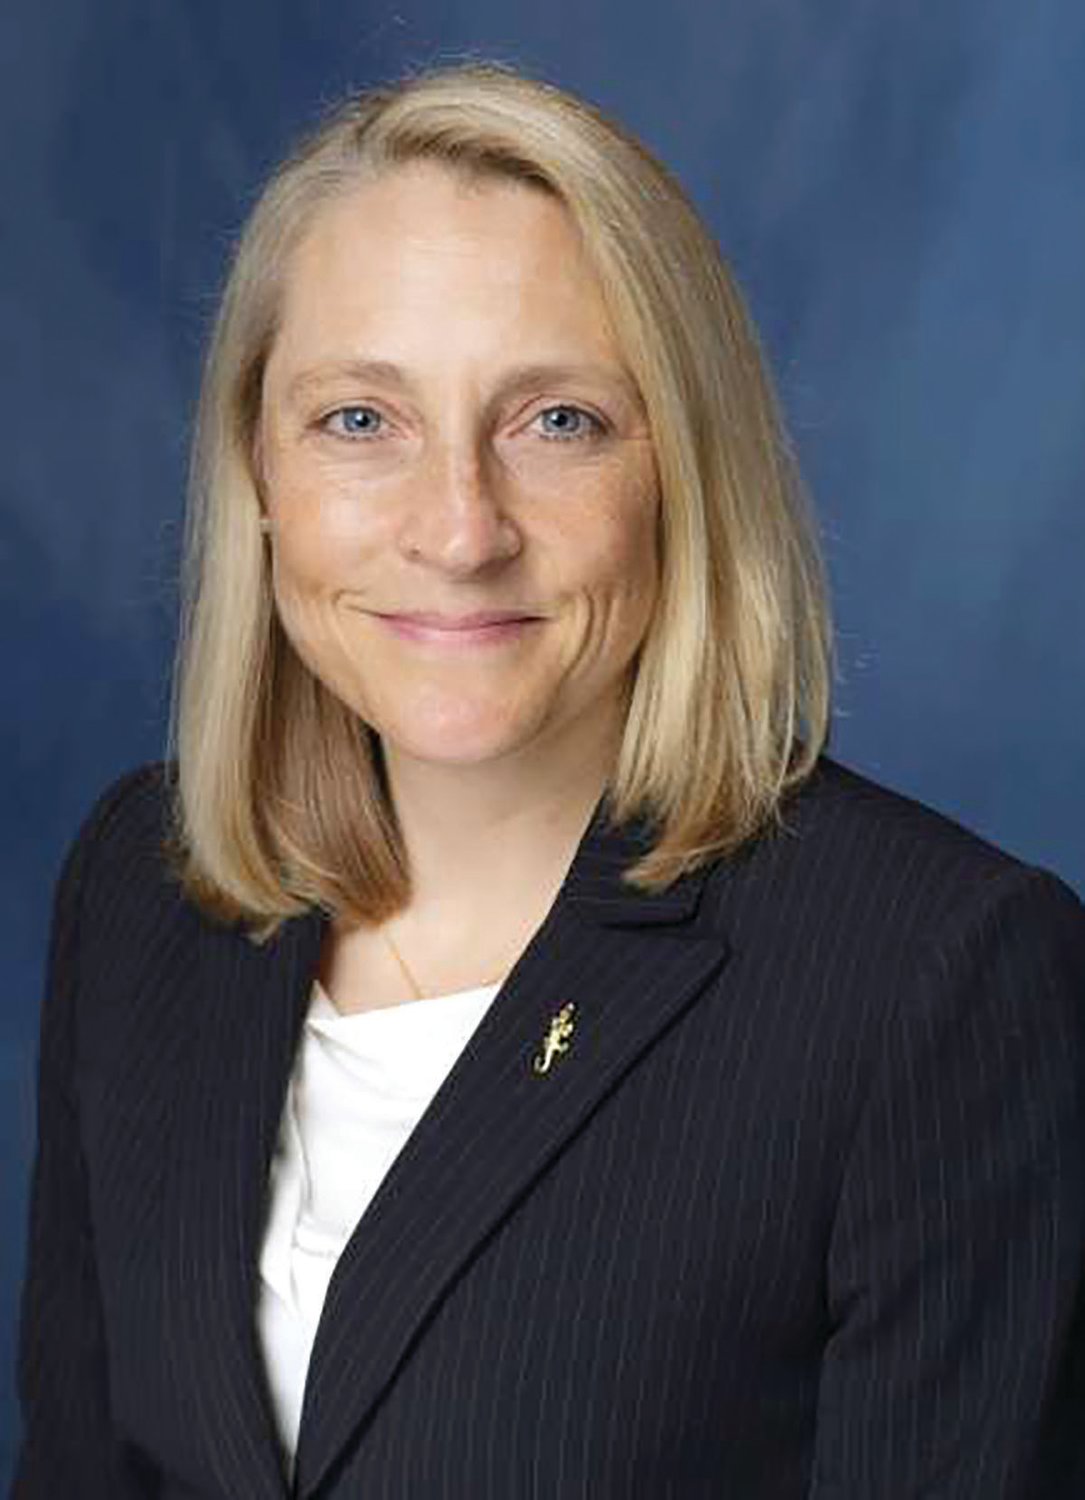 Dana Zimmel is dean of the University of Florida’s College of Veterinary Medicine.